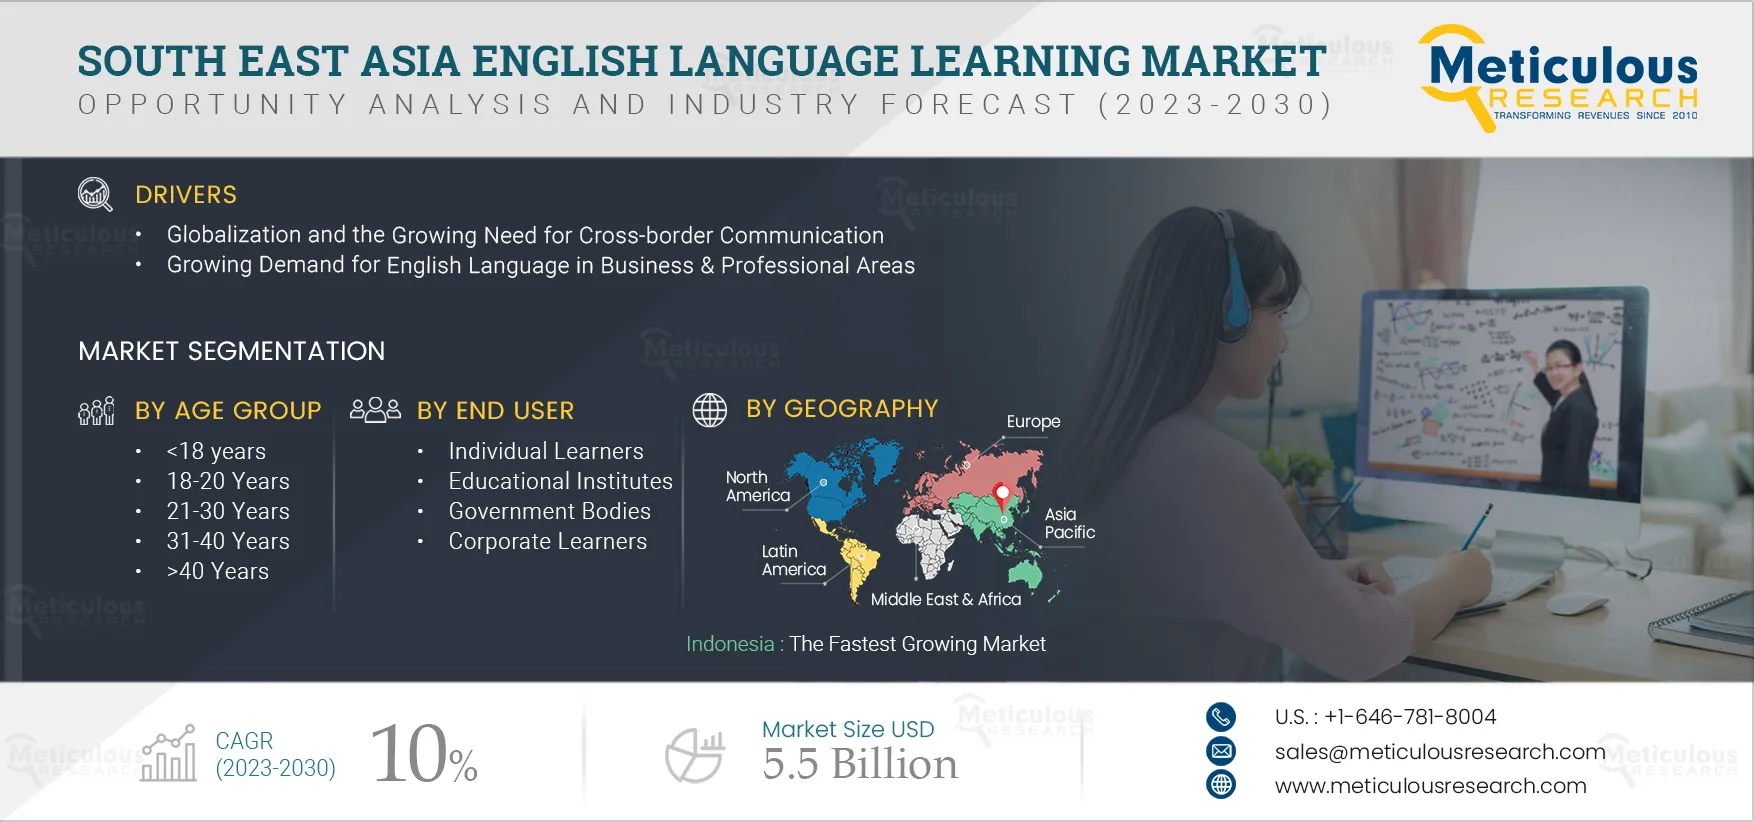 South East Asia English Language Learning Market